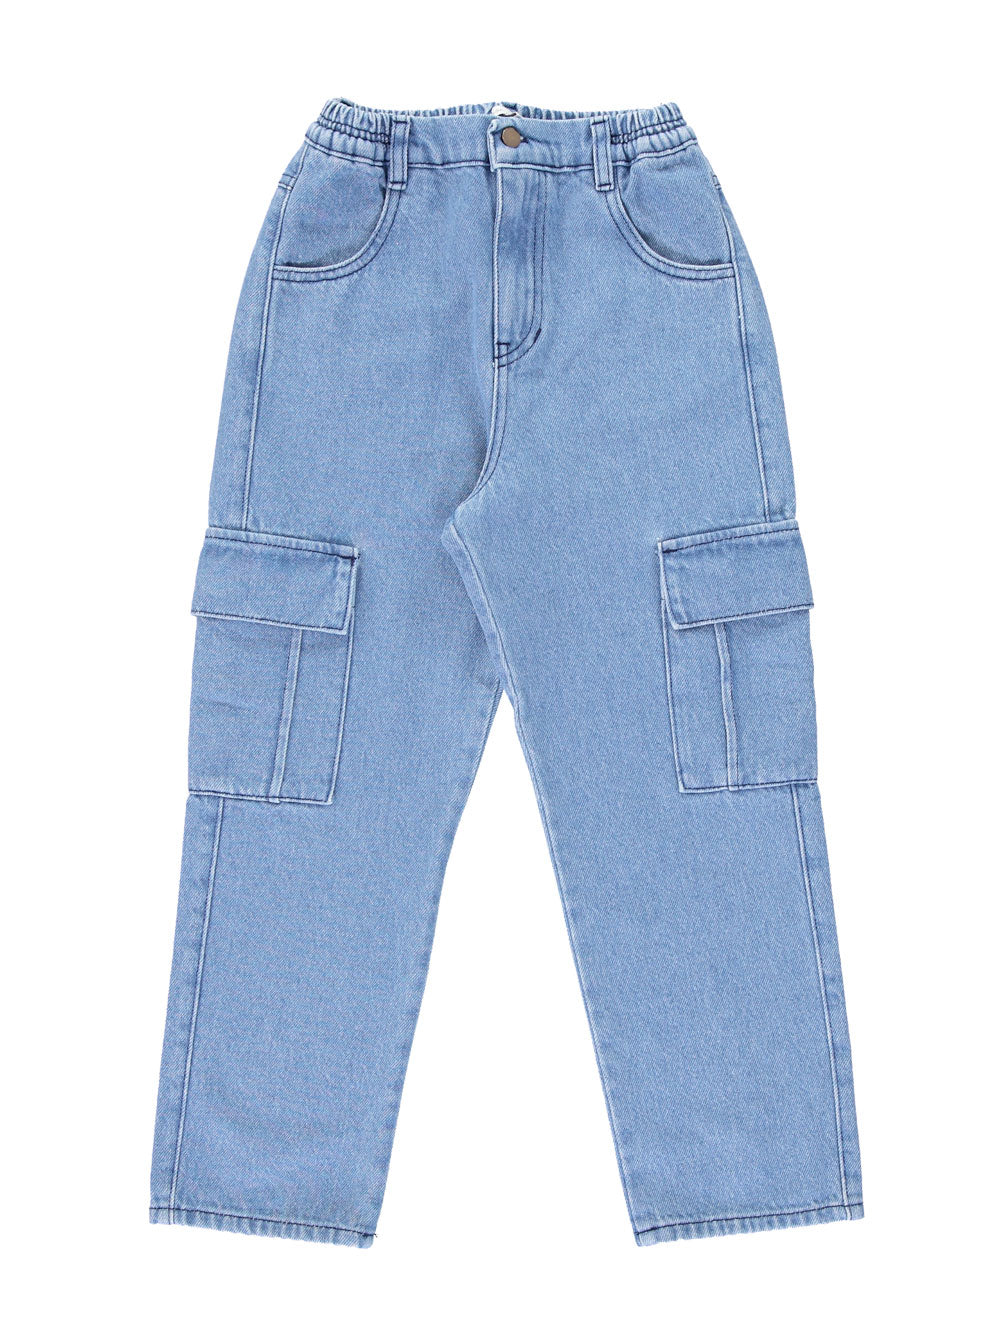 Fallon Blue Cargo Pants - Shan and Toad - Luxury Kidswear Shop